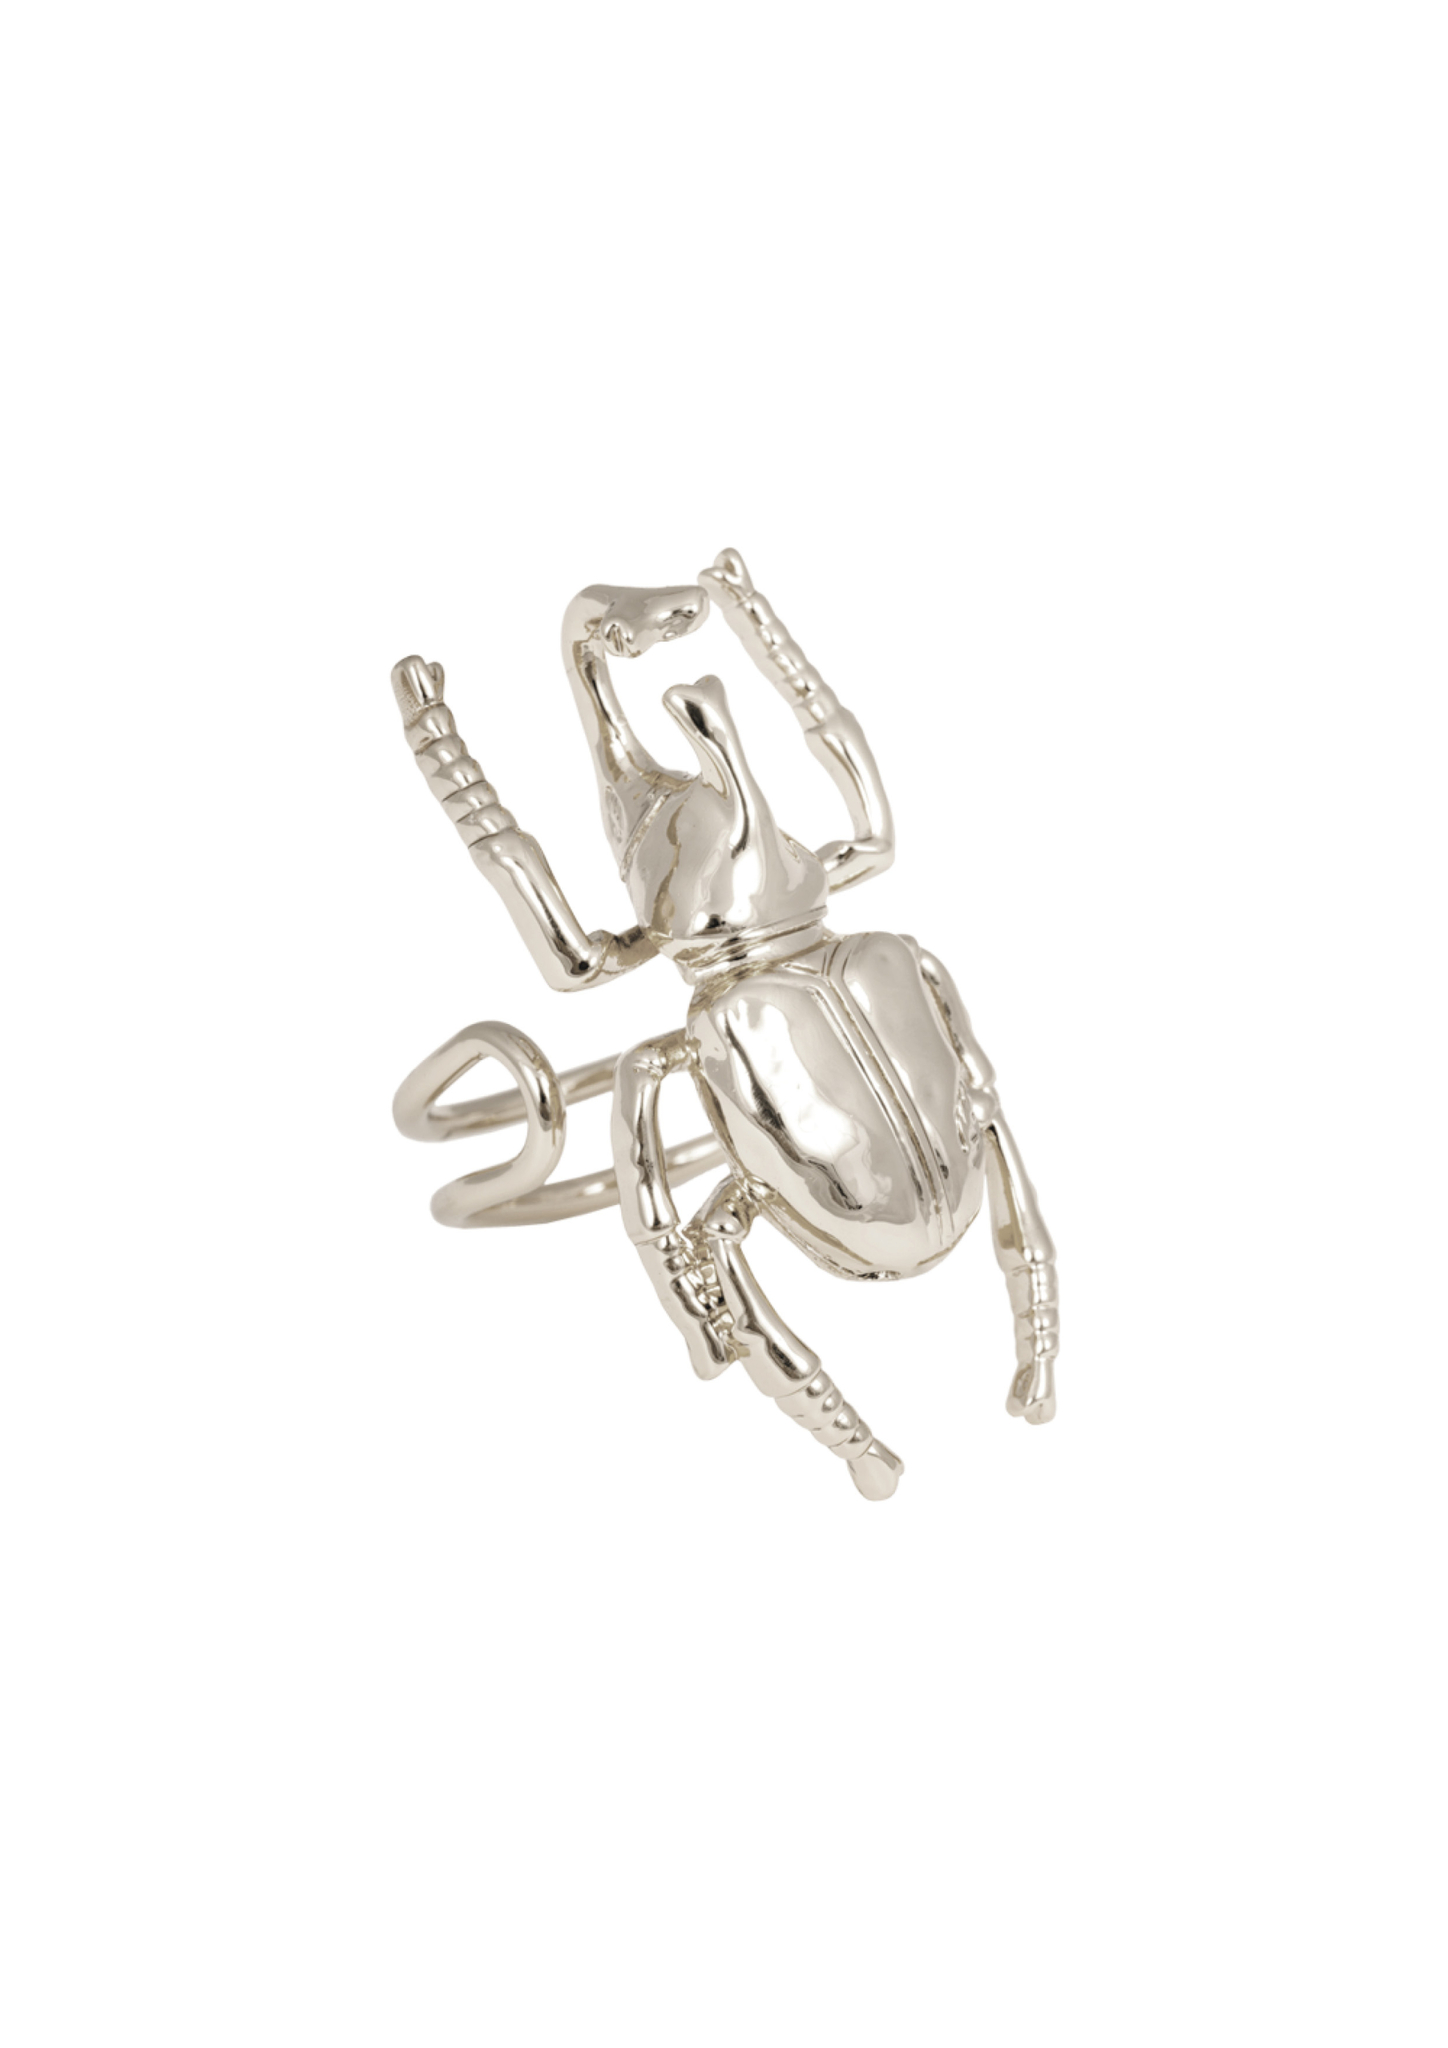 Beetle ring silver Ioaku Ericssonurochguld.se